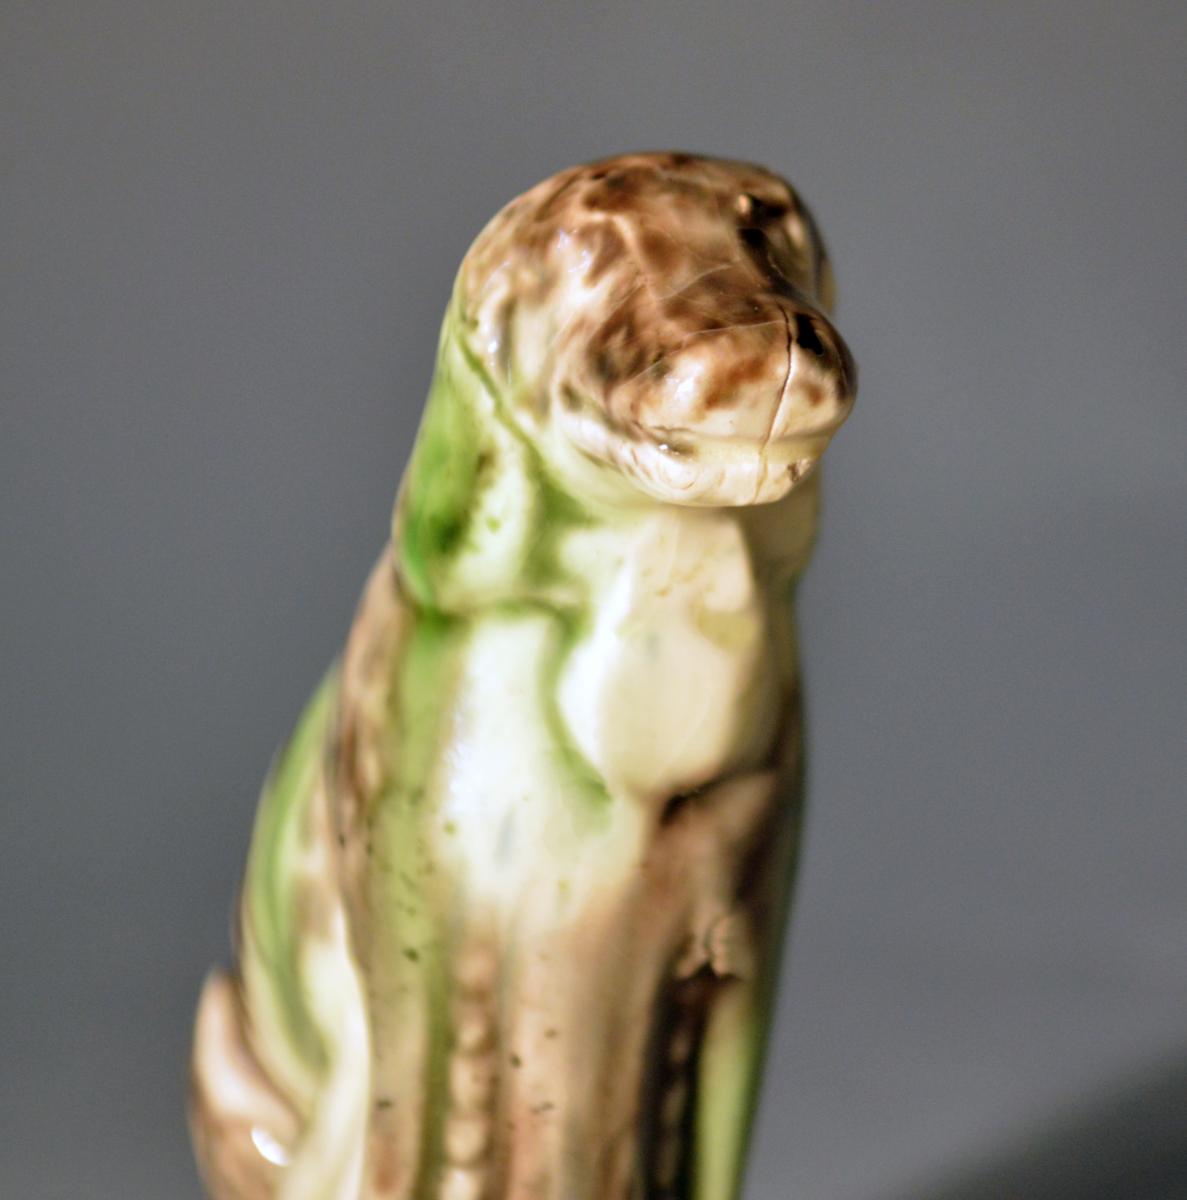 English Creamware Pottery Toy Whieldon-type Figure of a Hound